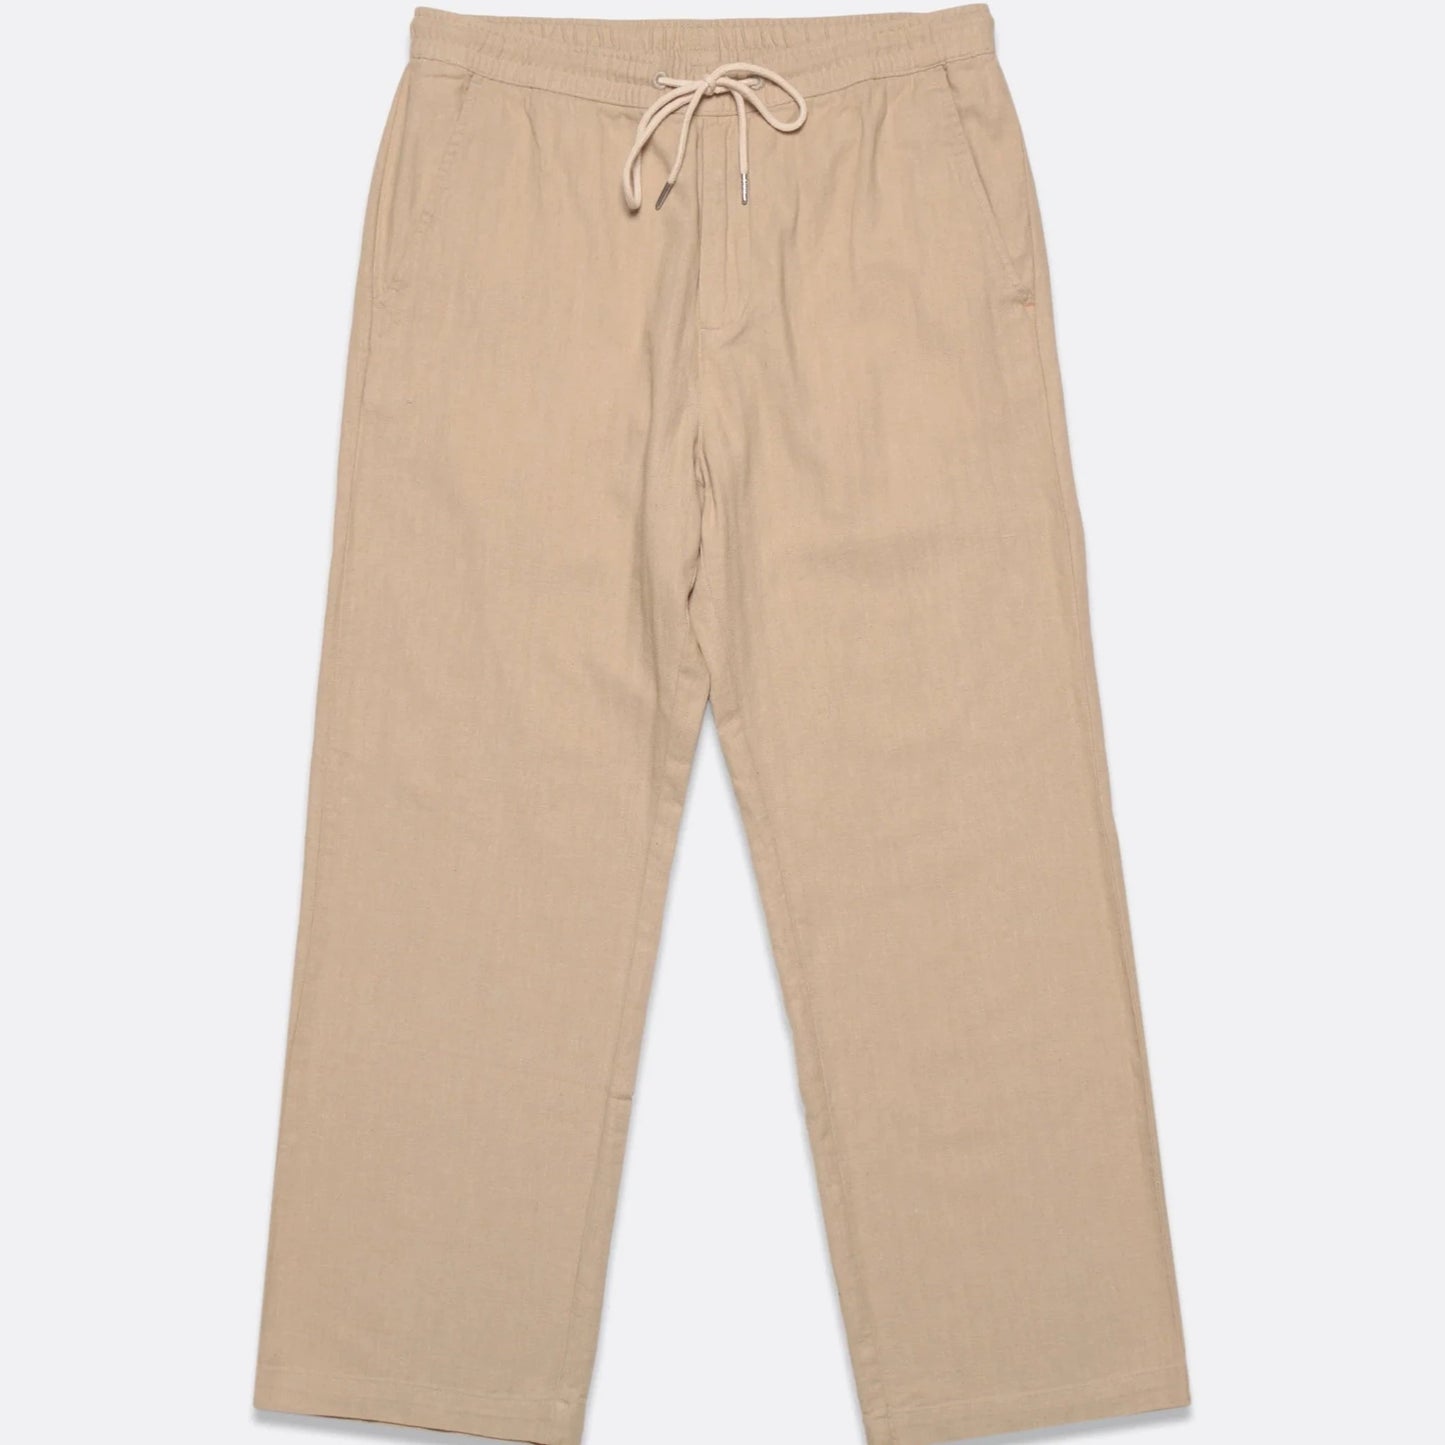 Sand herringbone trousers with elasticated, drawstring waistband.